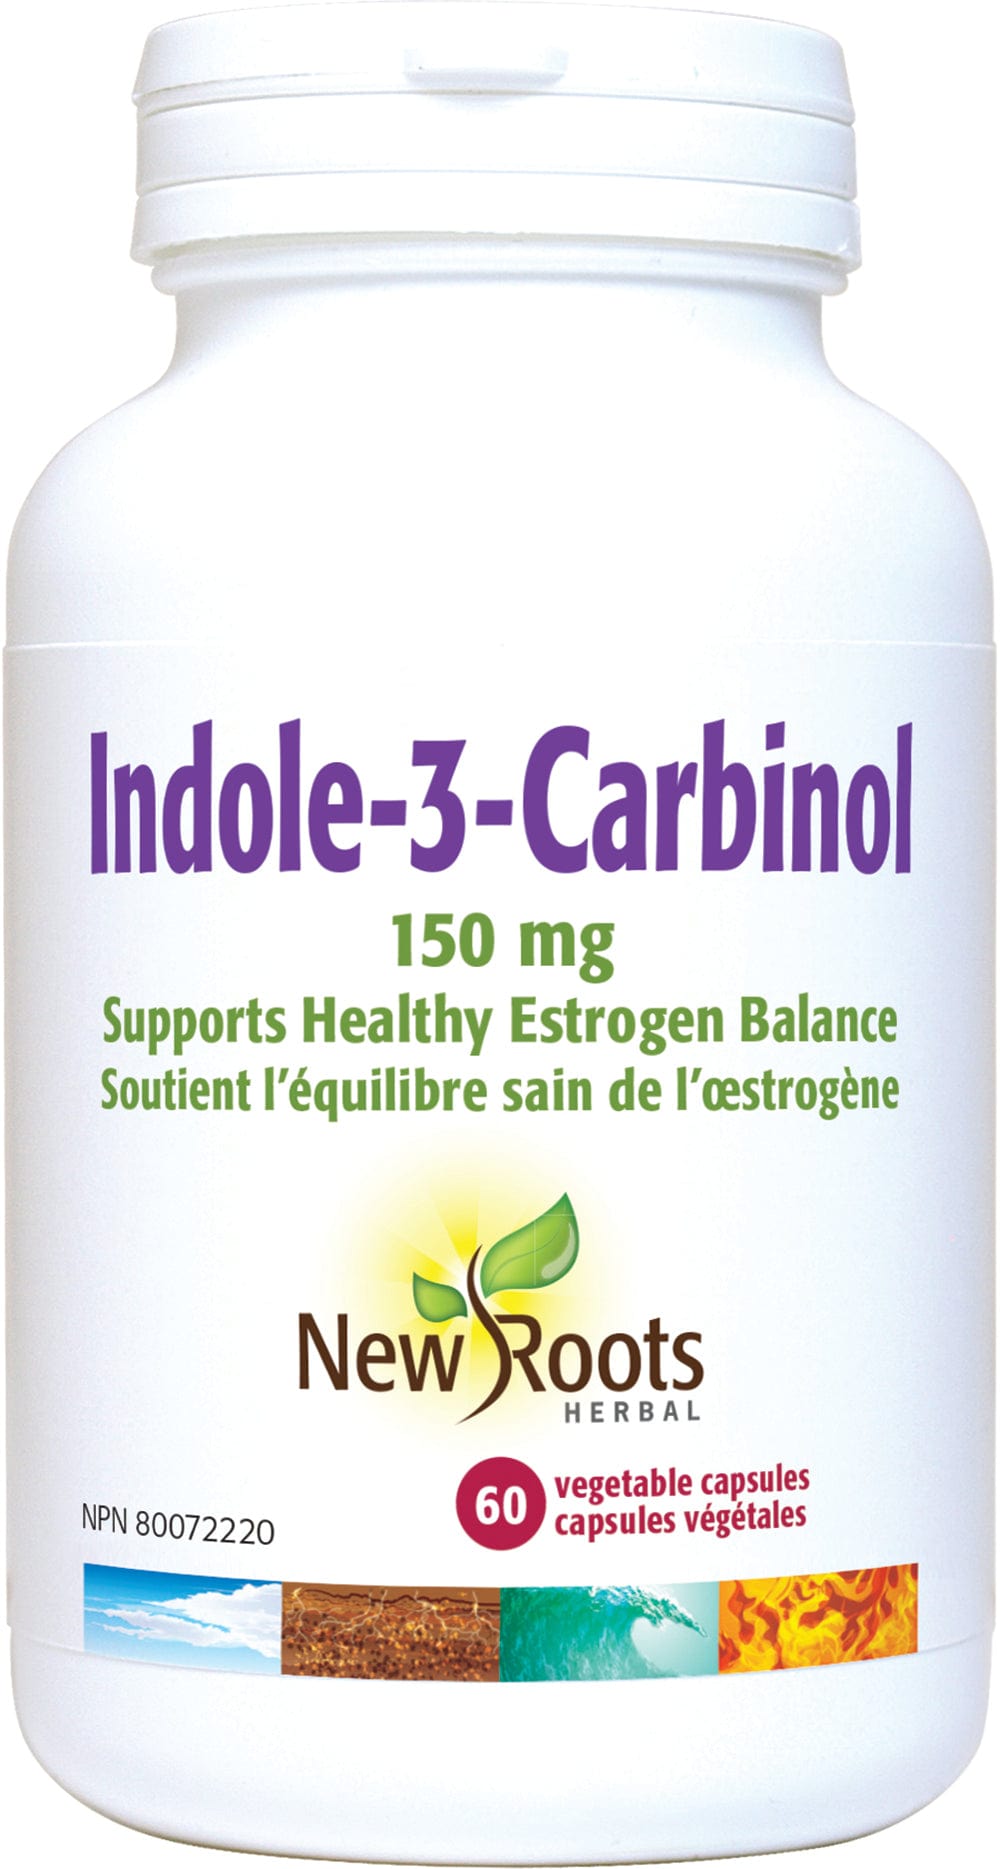 NEW ROOTS HERBAL Suppléments Indole-3-Carbinol 150mg 60caps